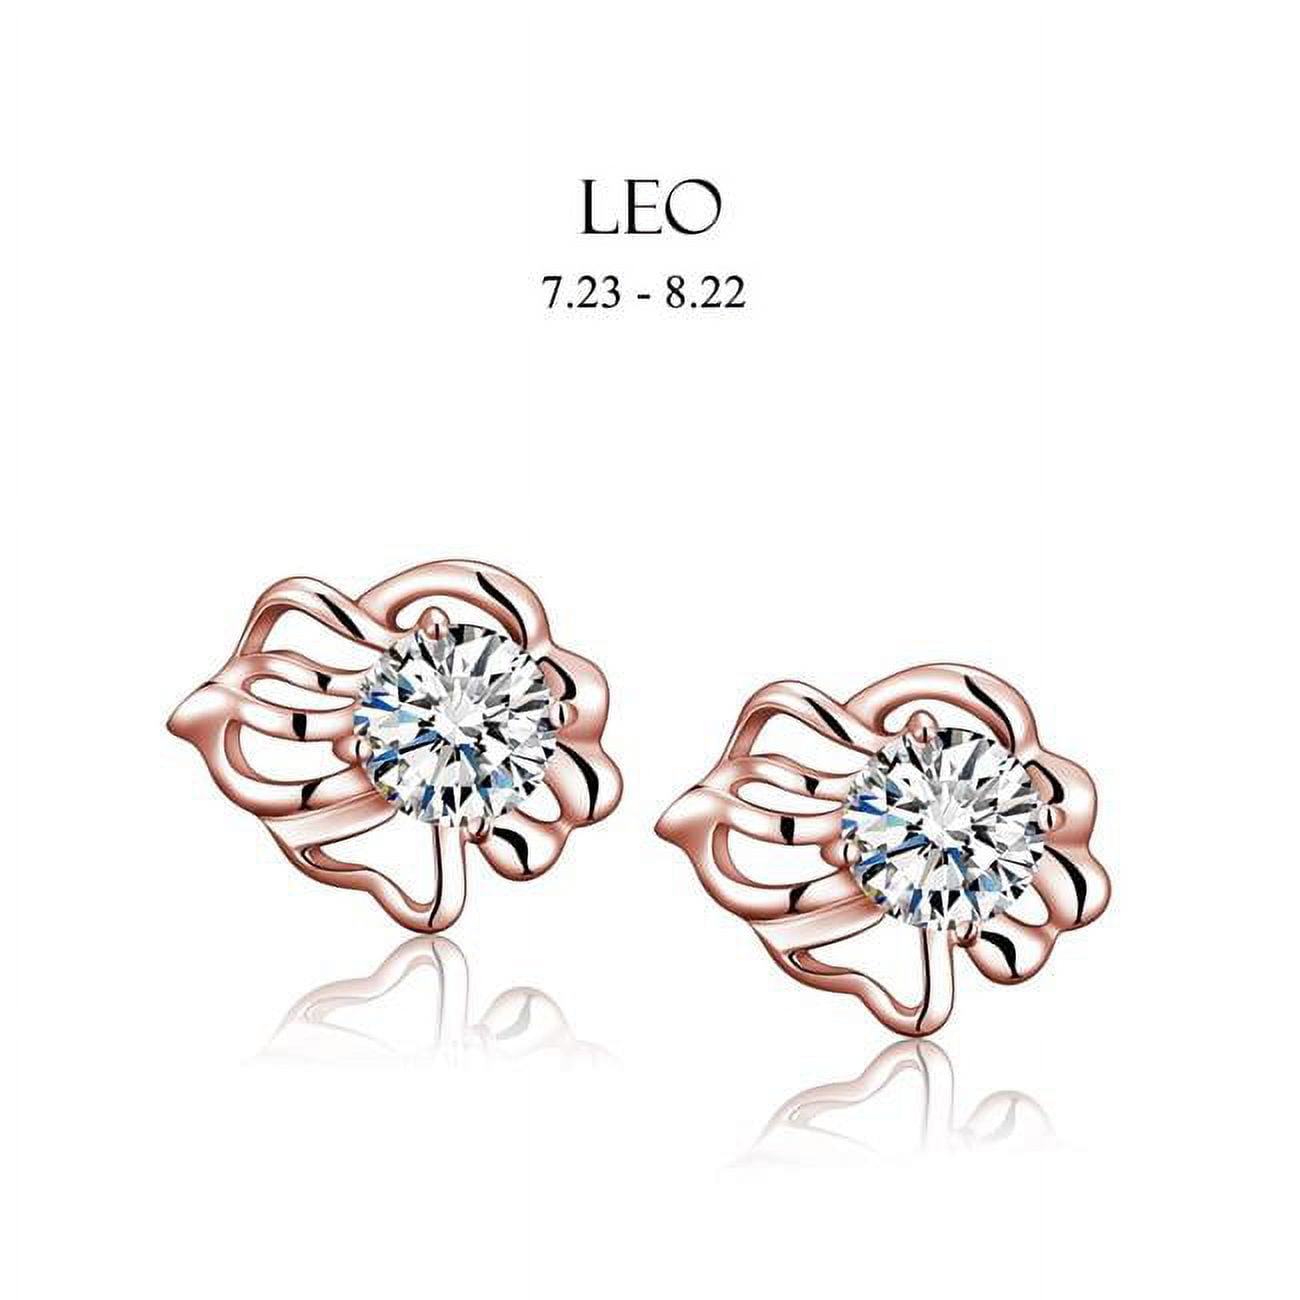 Picture of Amabel Designs E-I2CZLEO-RG Rose Gold Cubic Zirconia Leo Stud Earrings